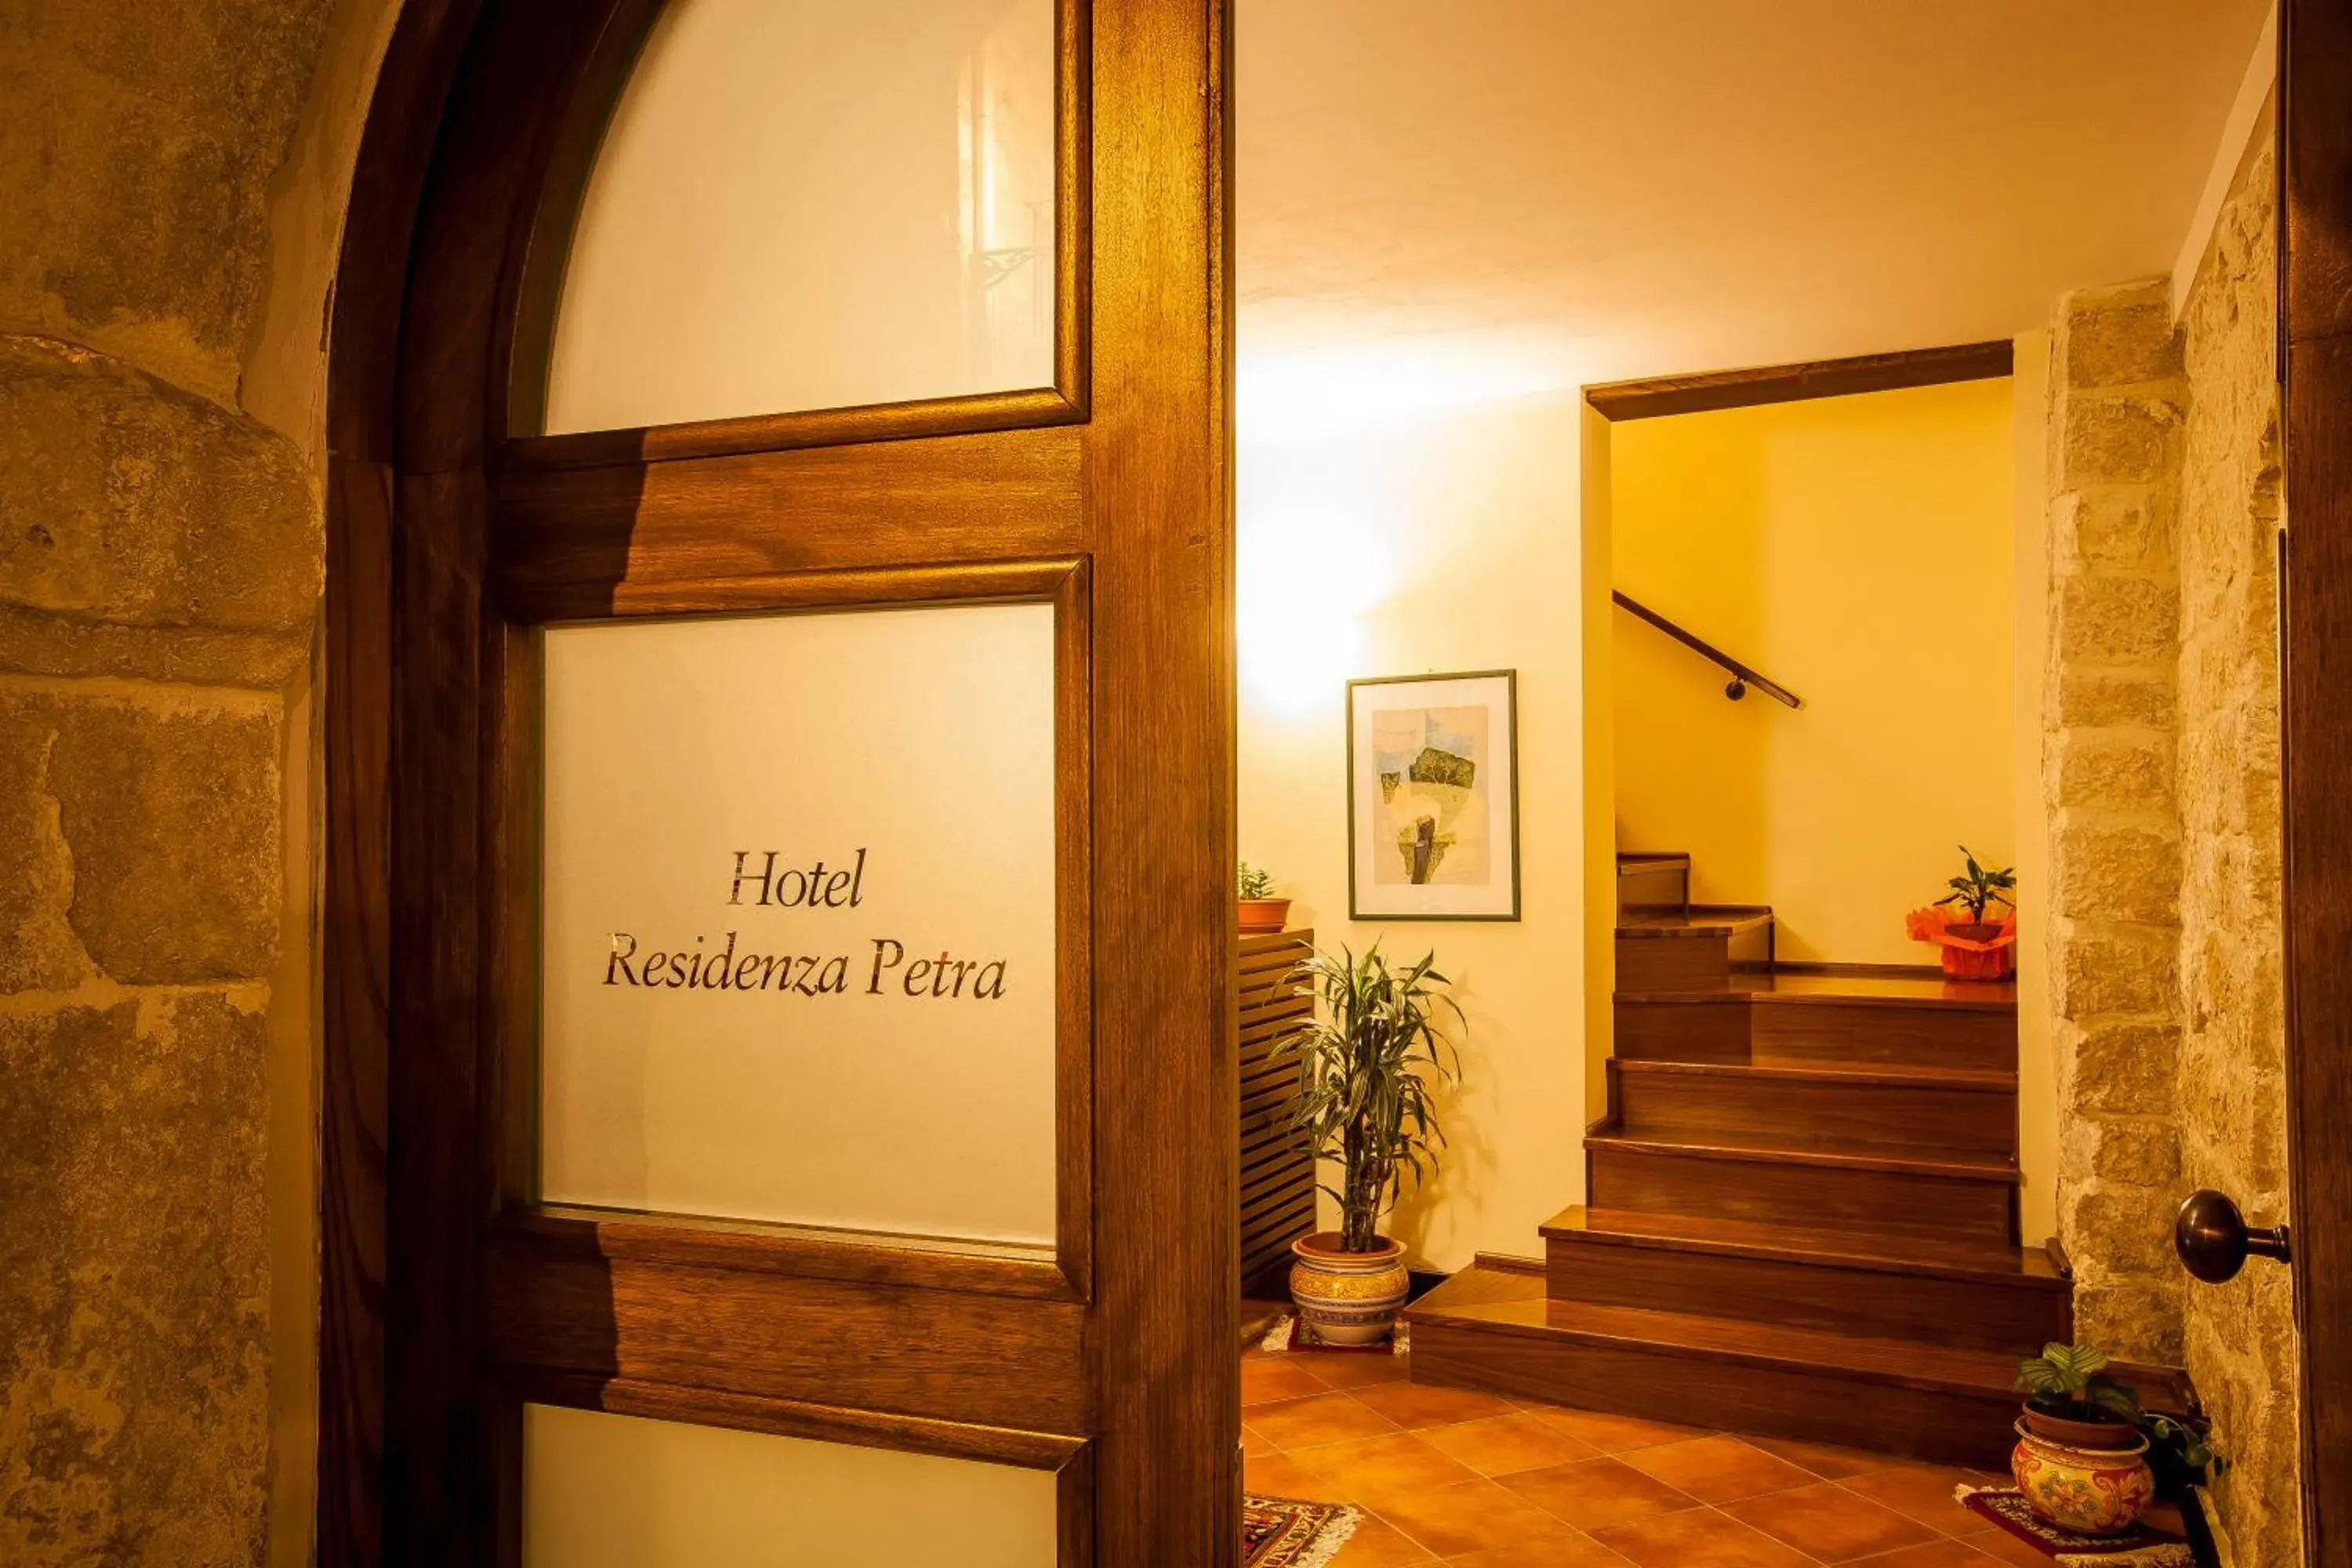 Lobby or reception in Hotel Residenza Petra